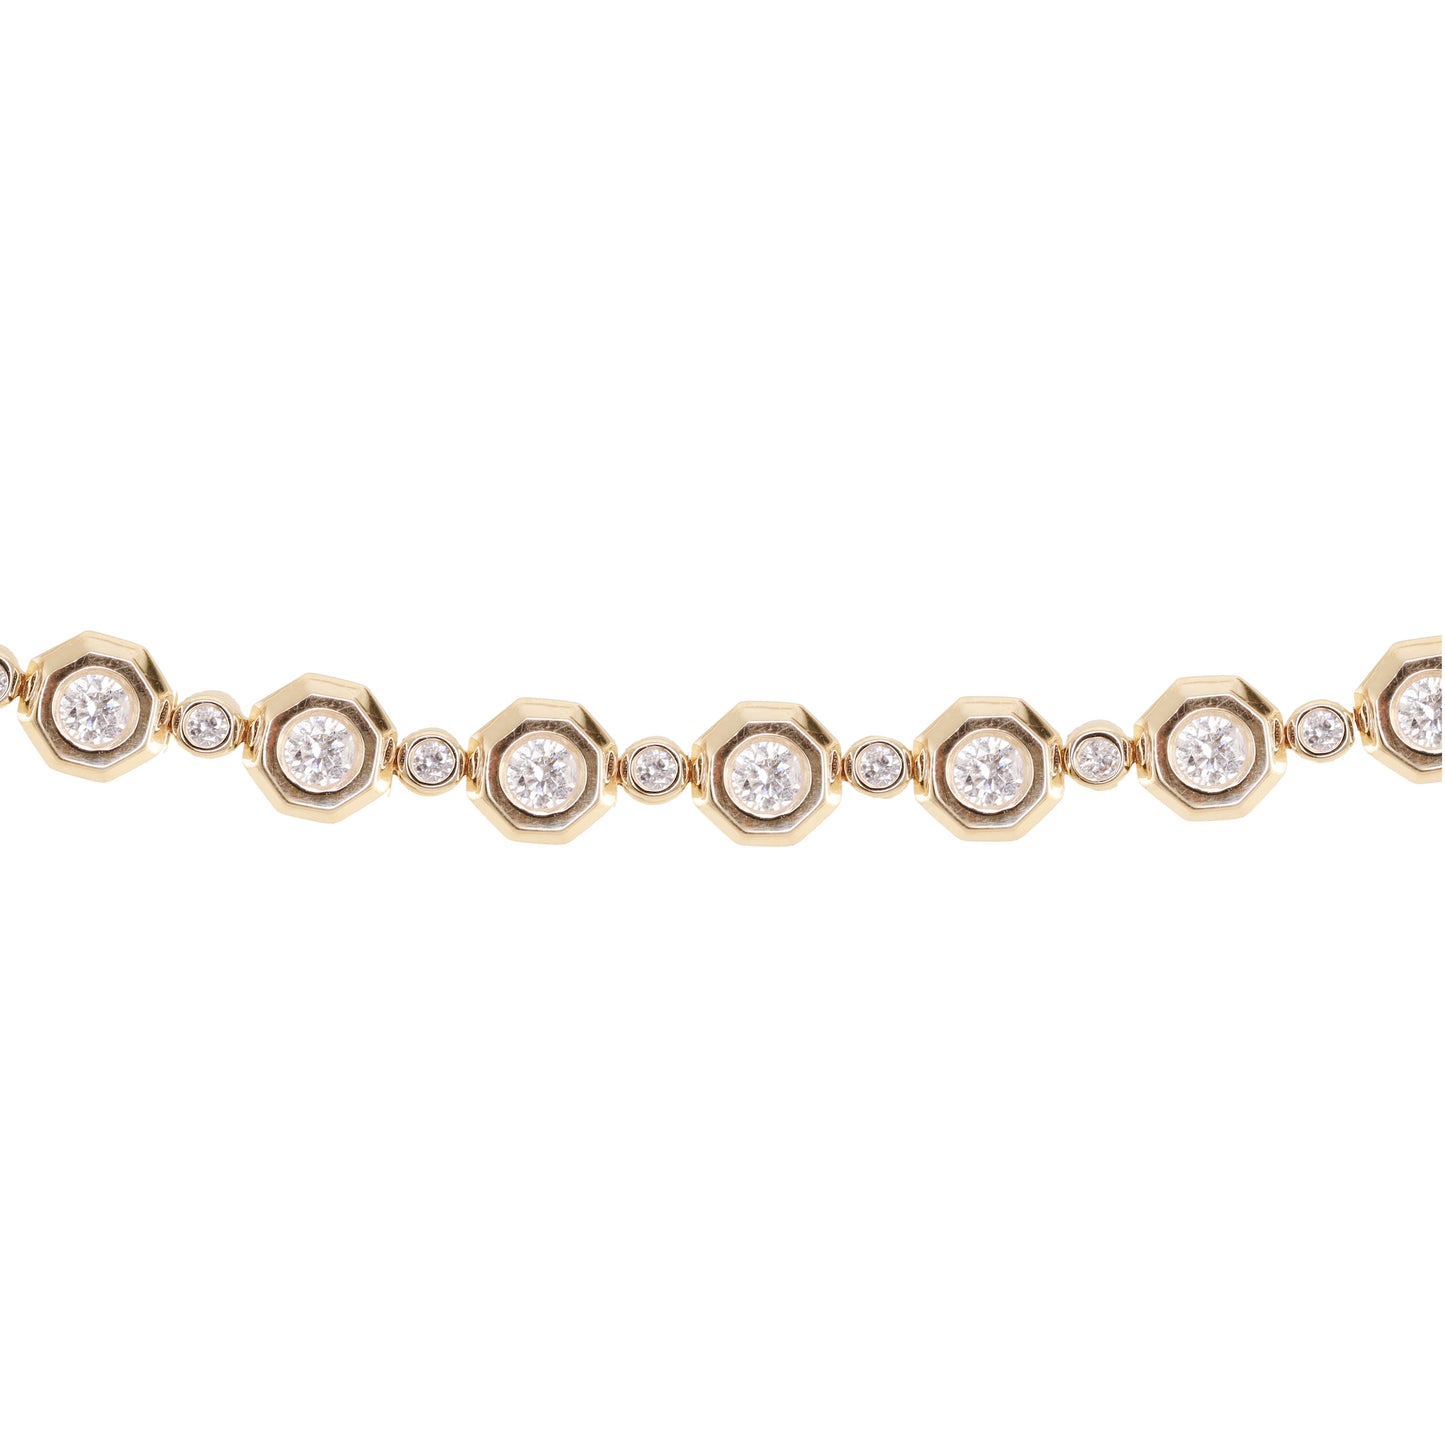 14kt gold and diamond honey comb tennis bracelet